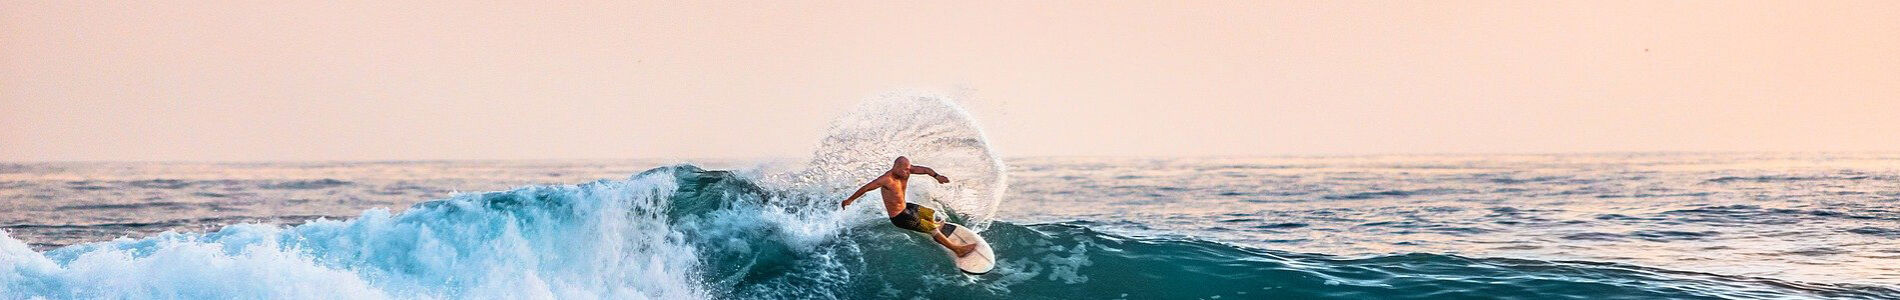 A surfer carves a wave at sunset